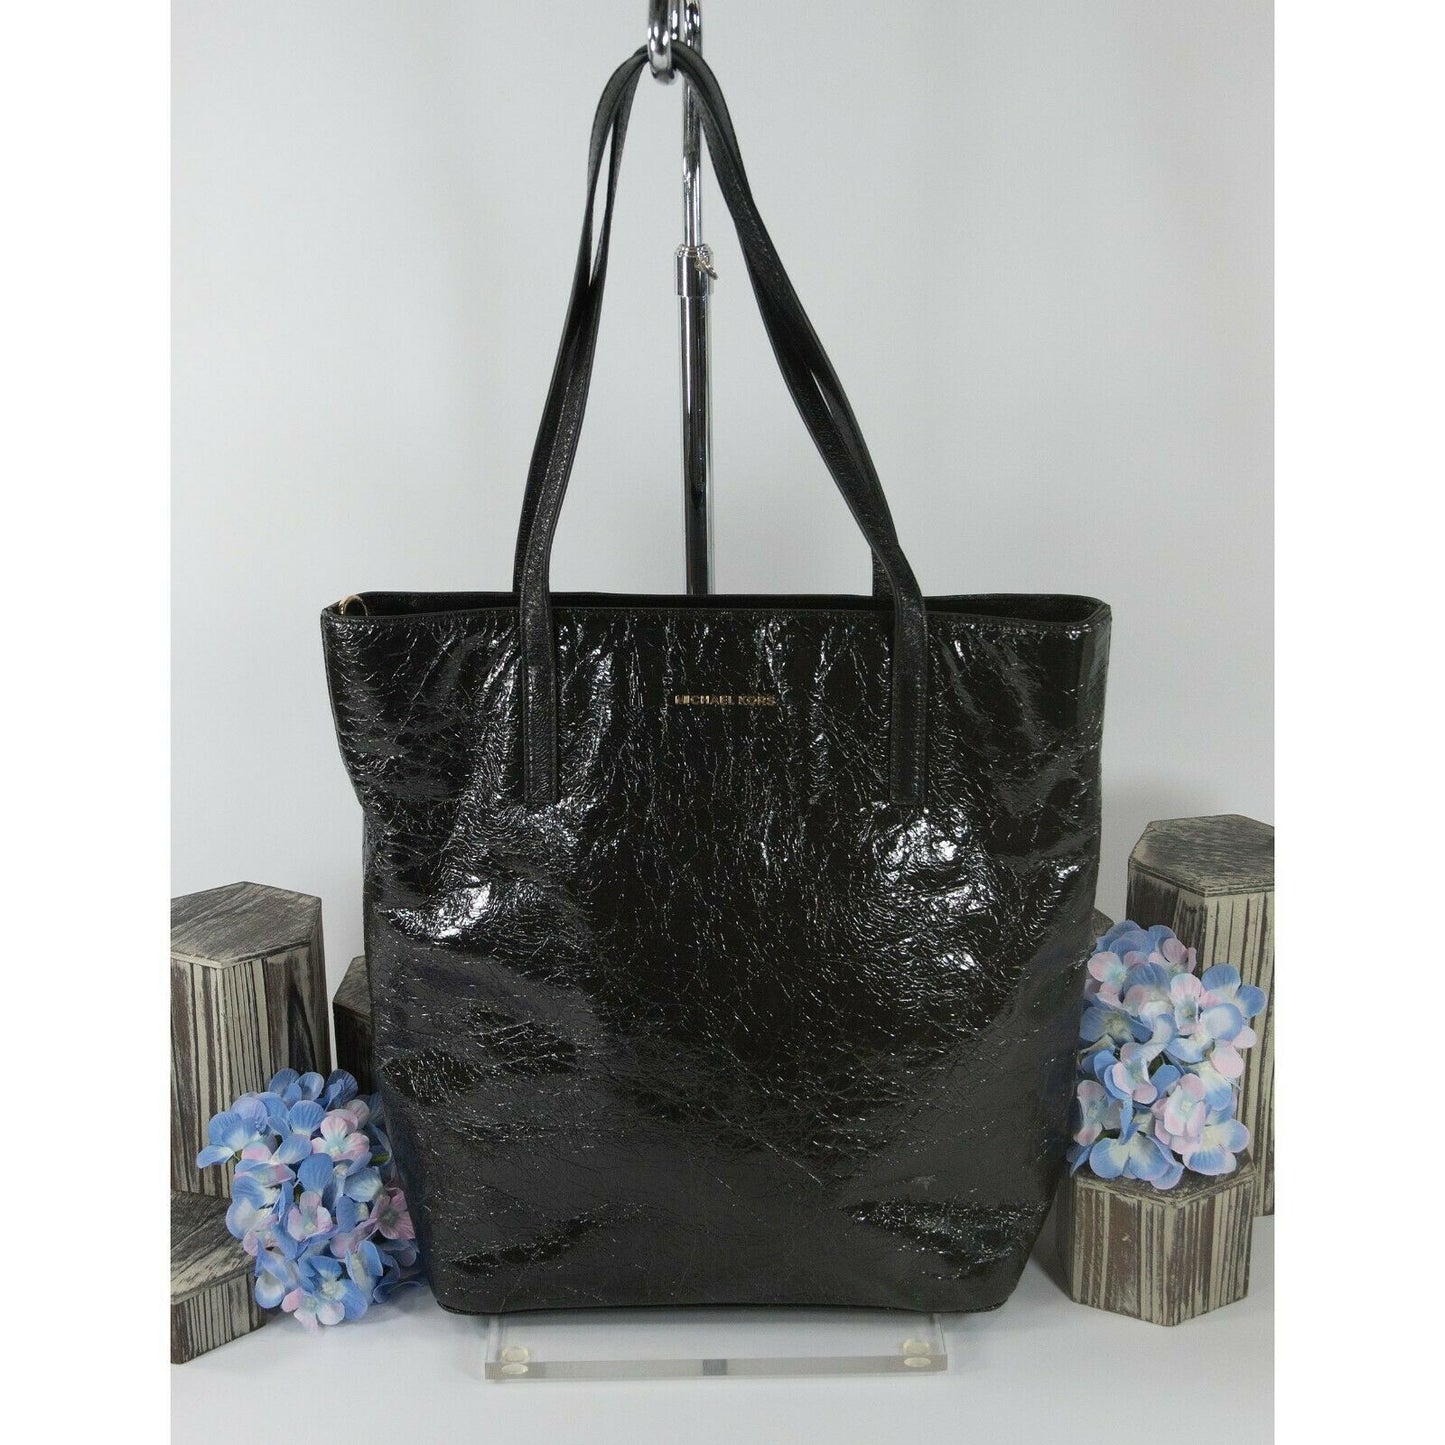 Michael Kors Emry Black Crinkled Leather Large Tote Bag NWT